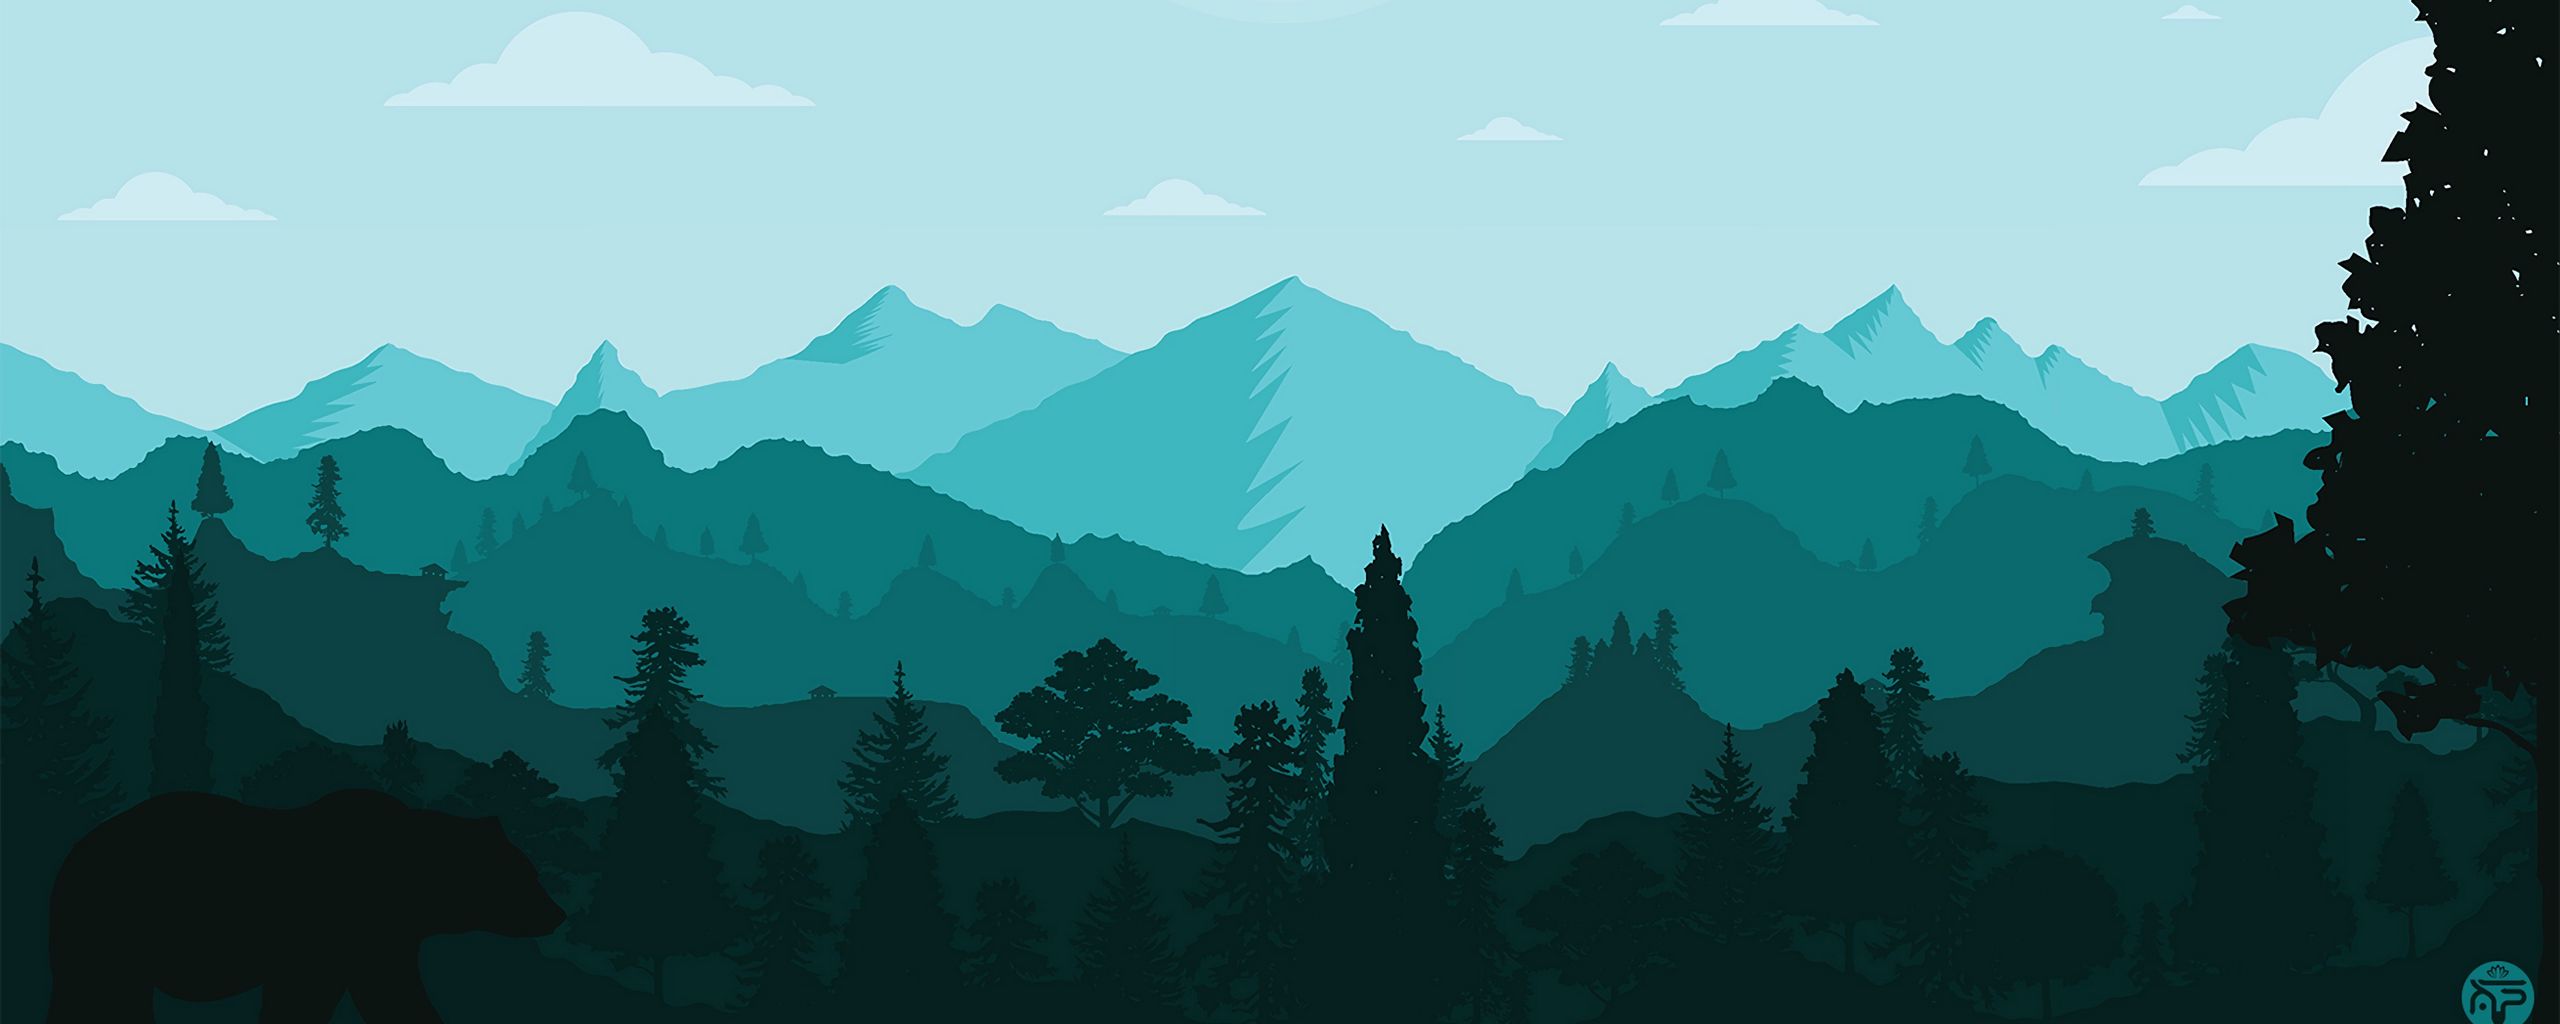 Mountain Landscape Wallpapers